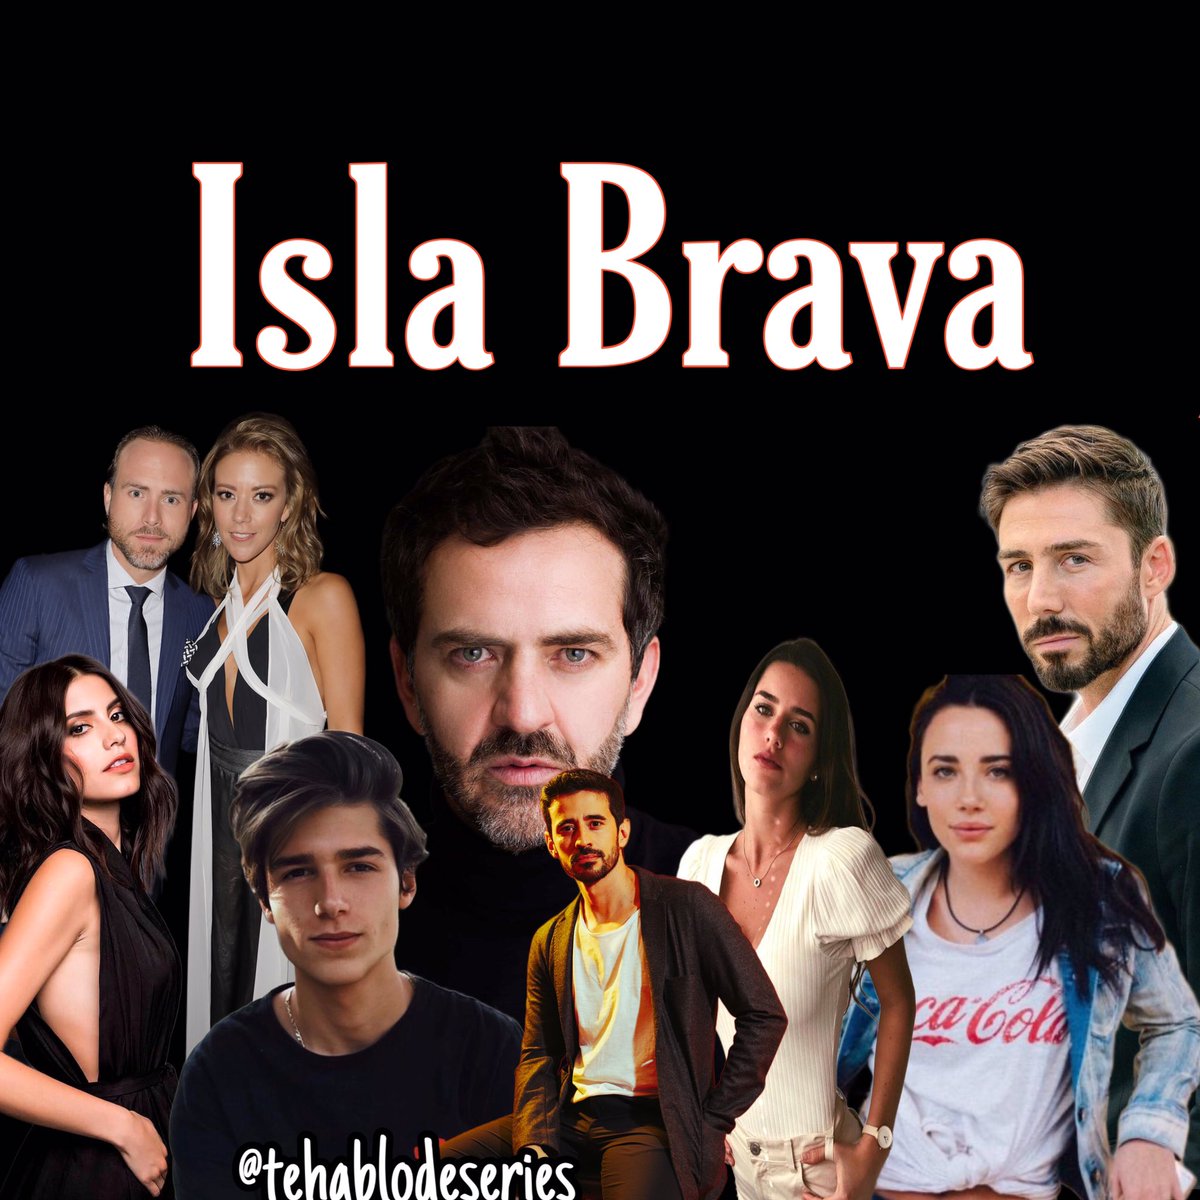 📍La serie #IslaBrava llegará próximamente a #vixplus 

📍Protagonizada por #FernandaDelCastillo, #ErikHayser, #FlavioMedina, #BarbaraLopez, #PabloAstiazaran, #JuanPabloFuentes, #KarenaFlores, entre otros.